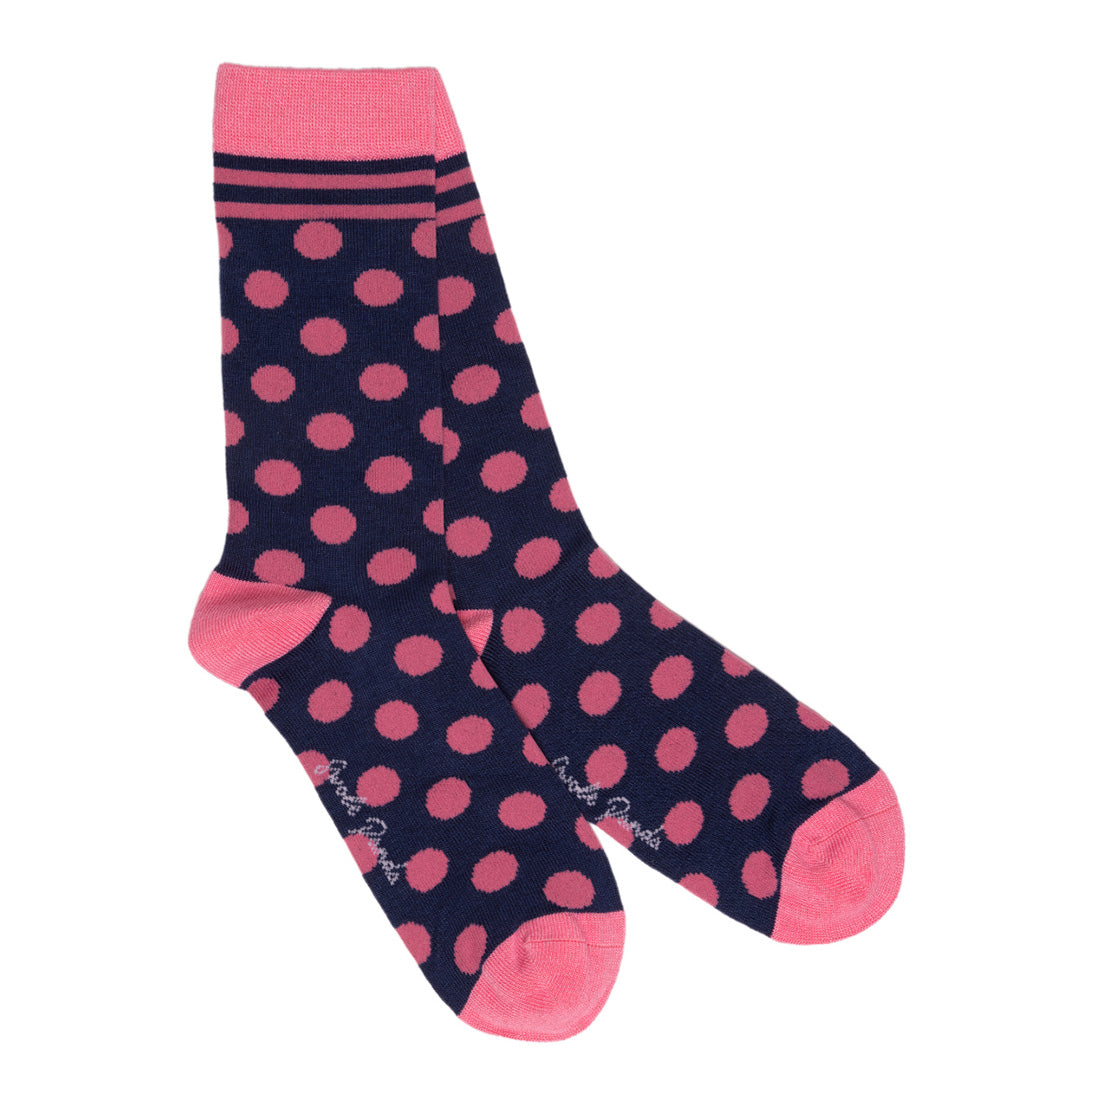 socks-navy-and-pink-polka-dot-bamboo-socks-1.jpg